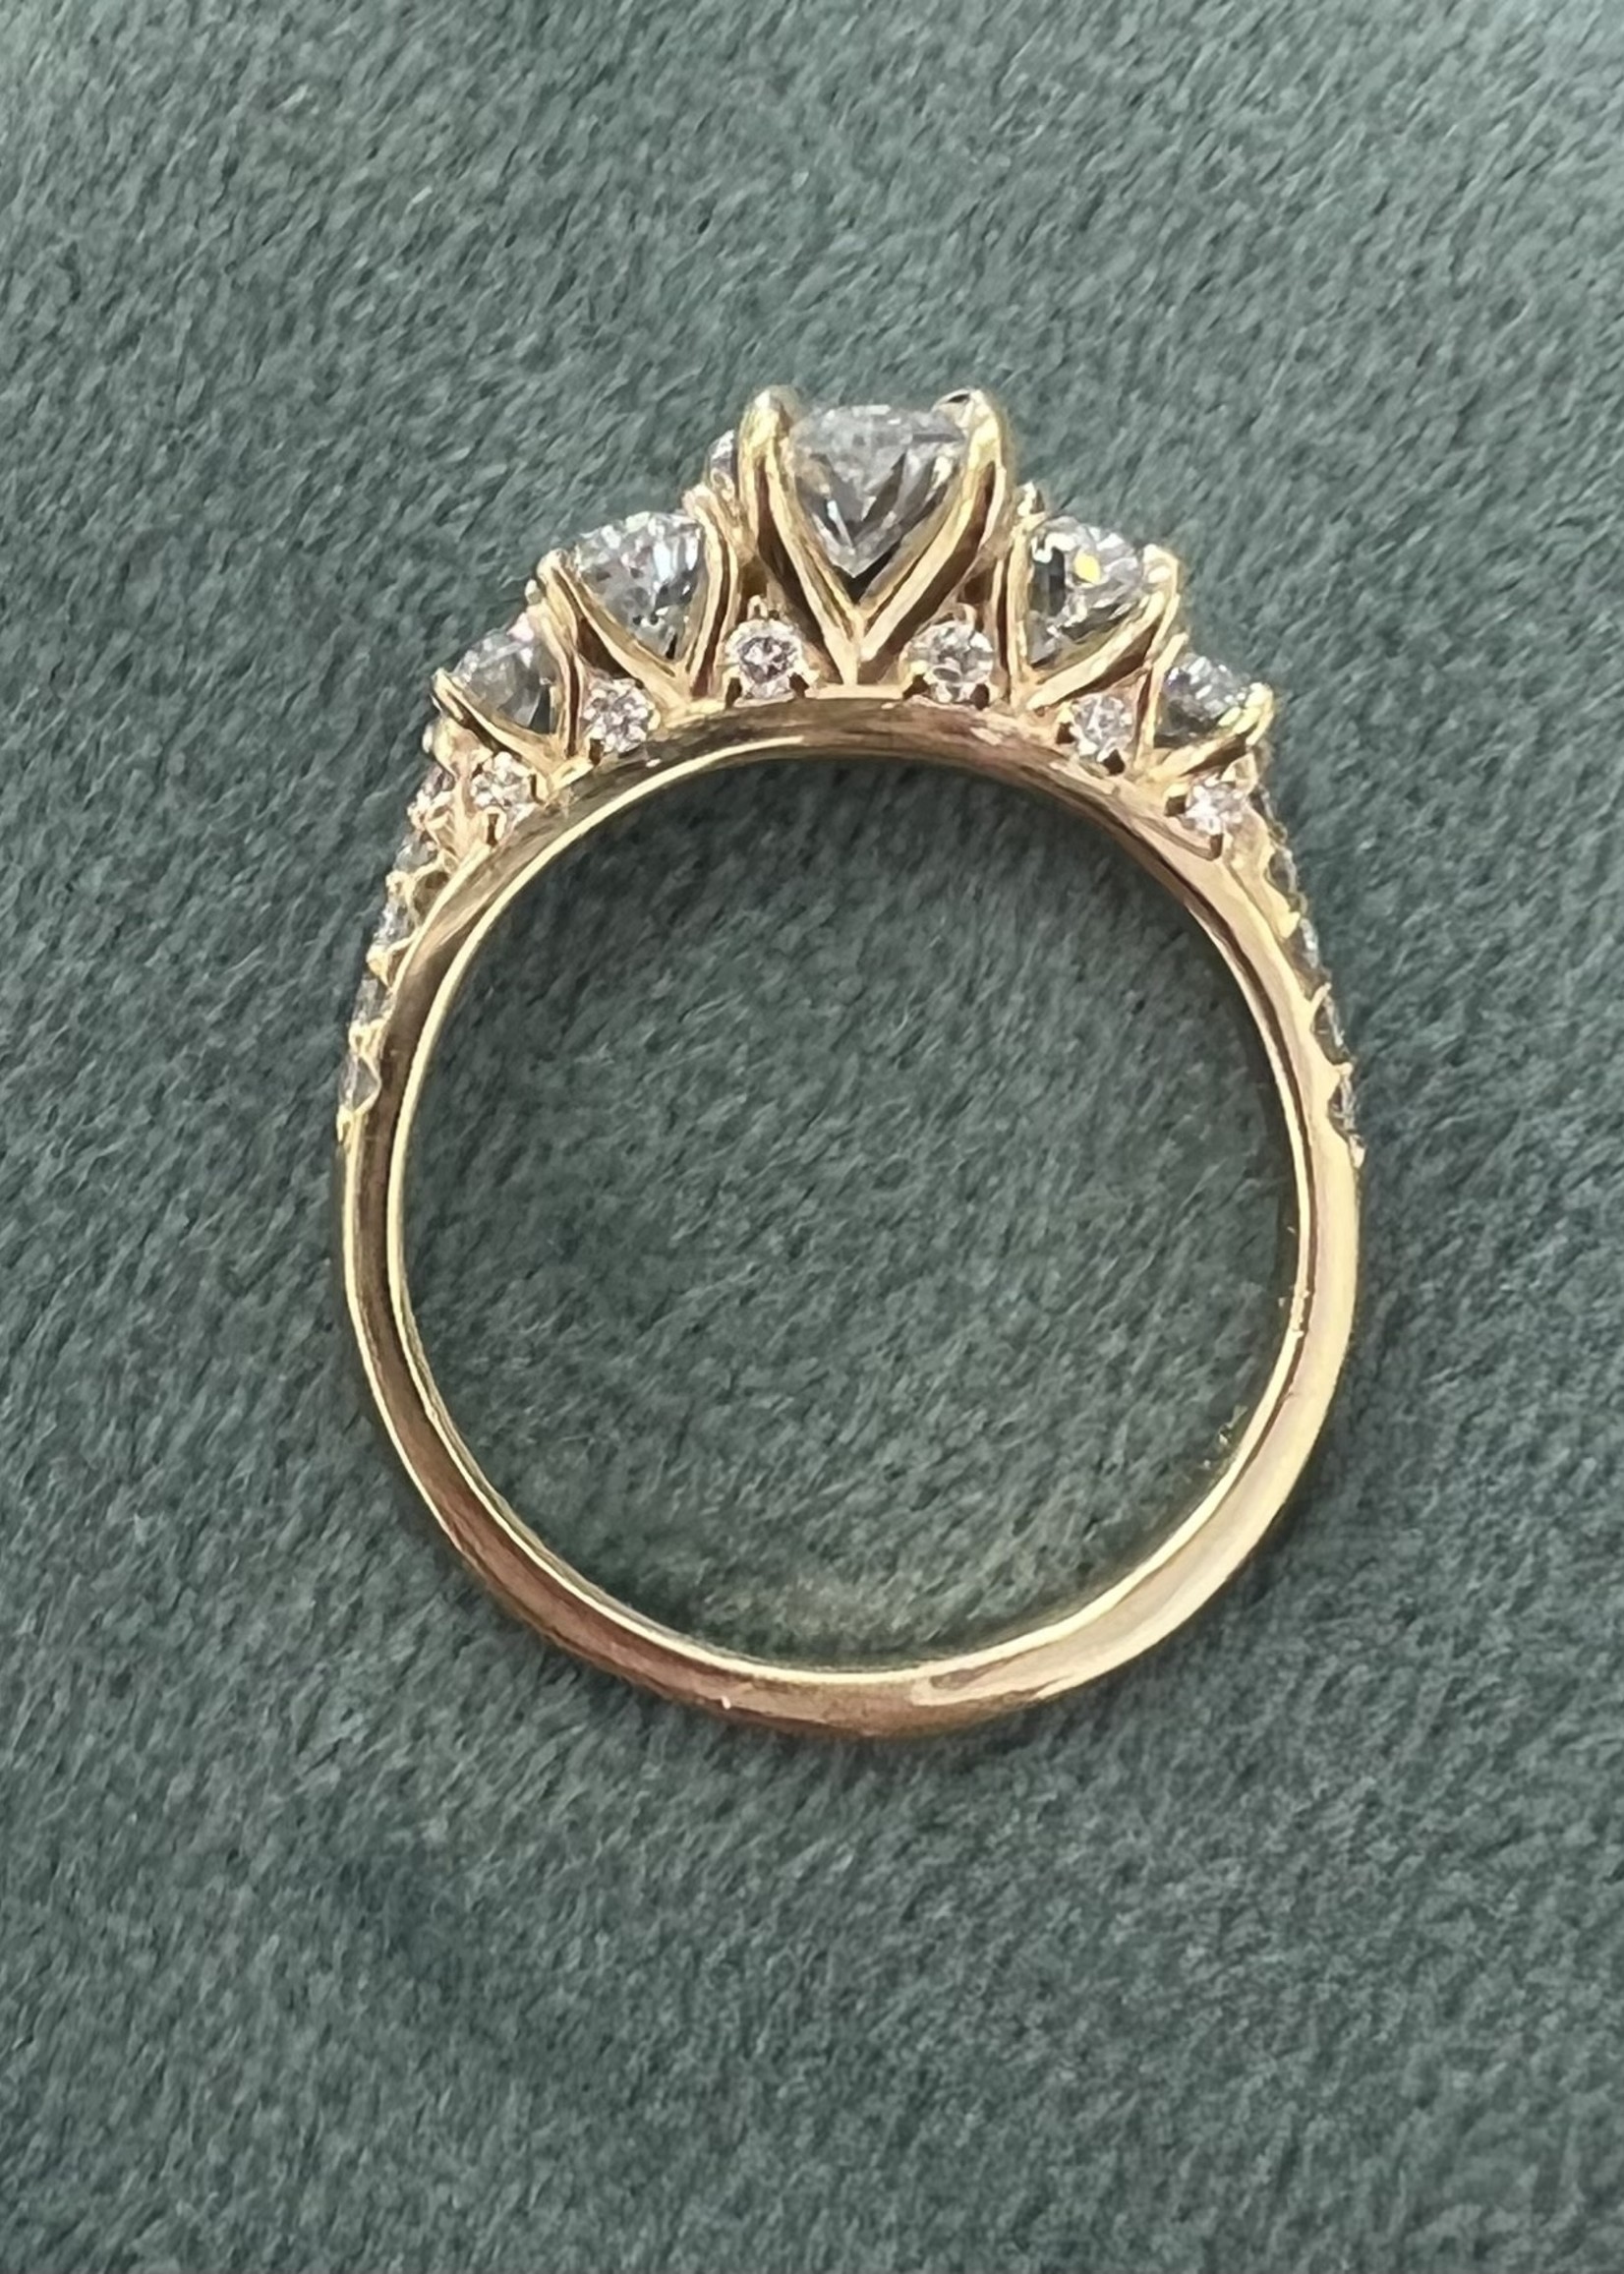 ASH 14k Yellow Gold  2.5ctw Oval Cut Diamond Engagement Ring